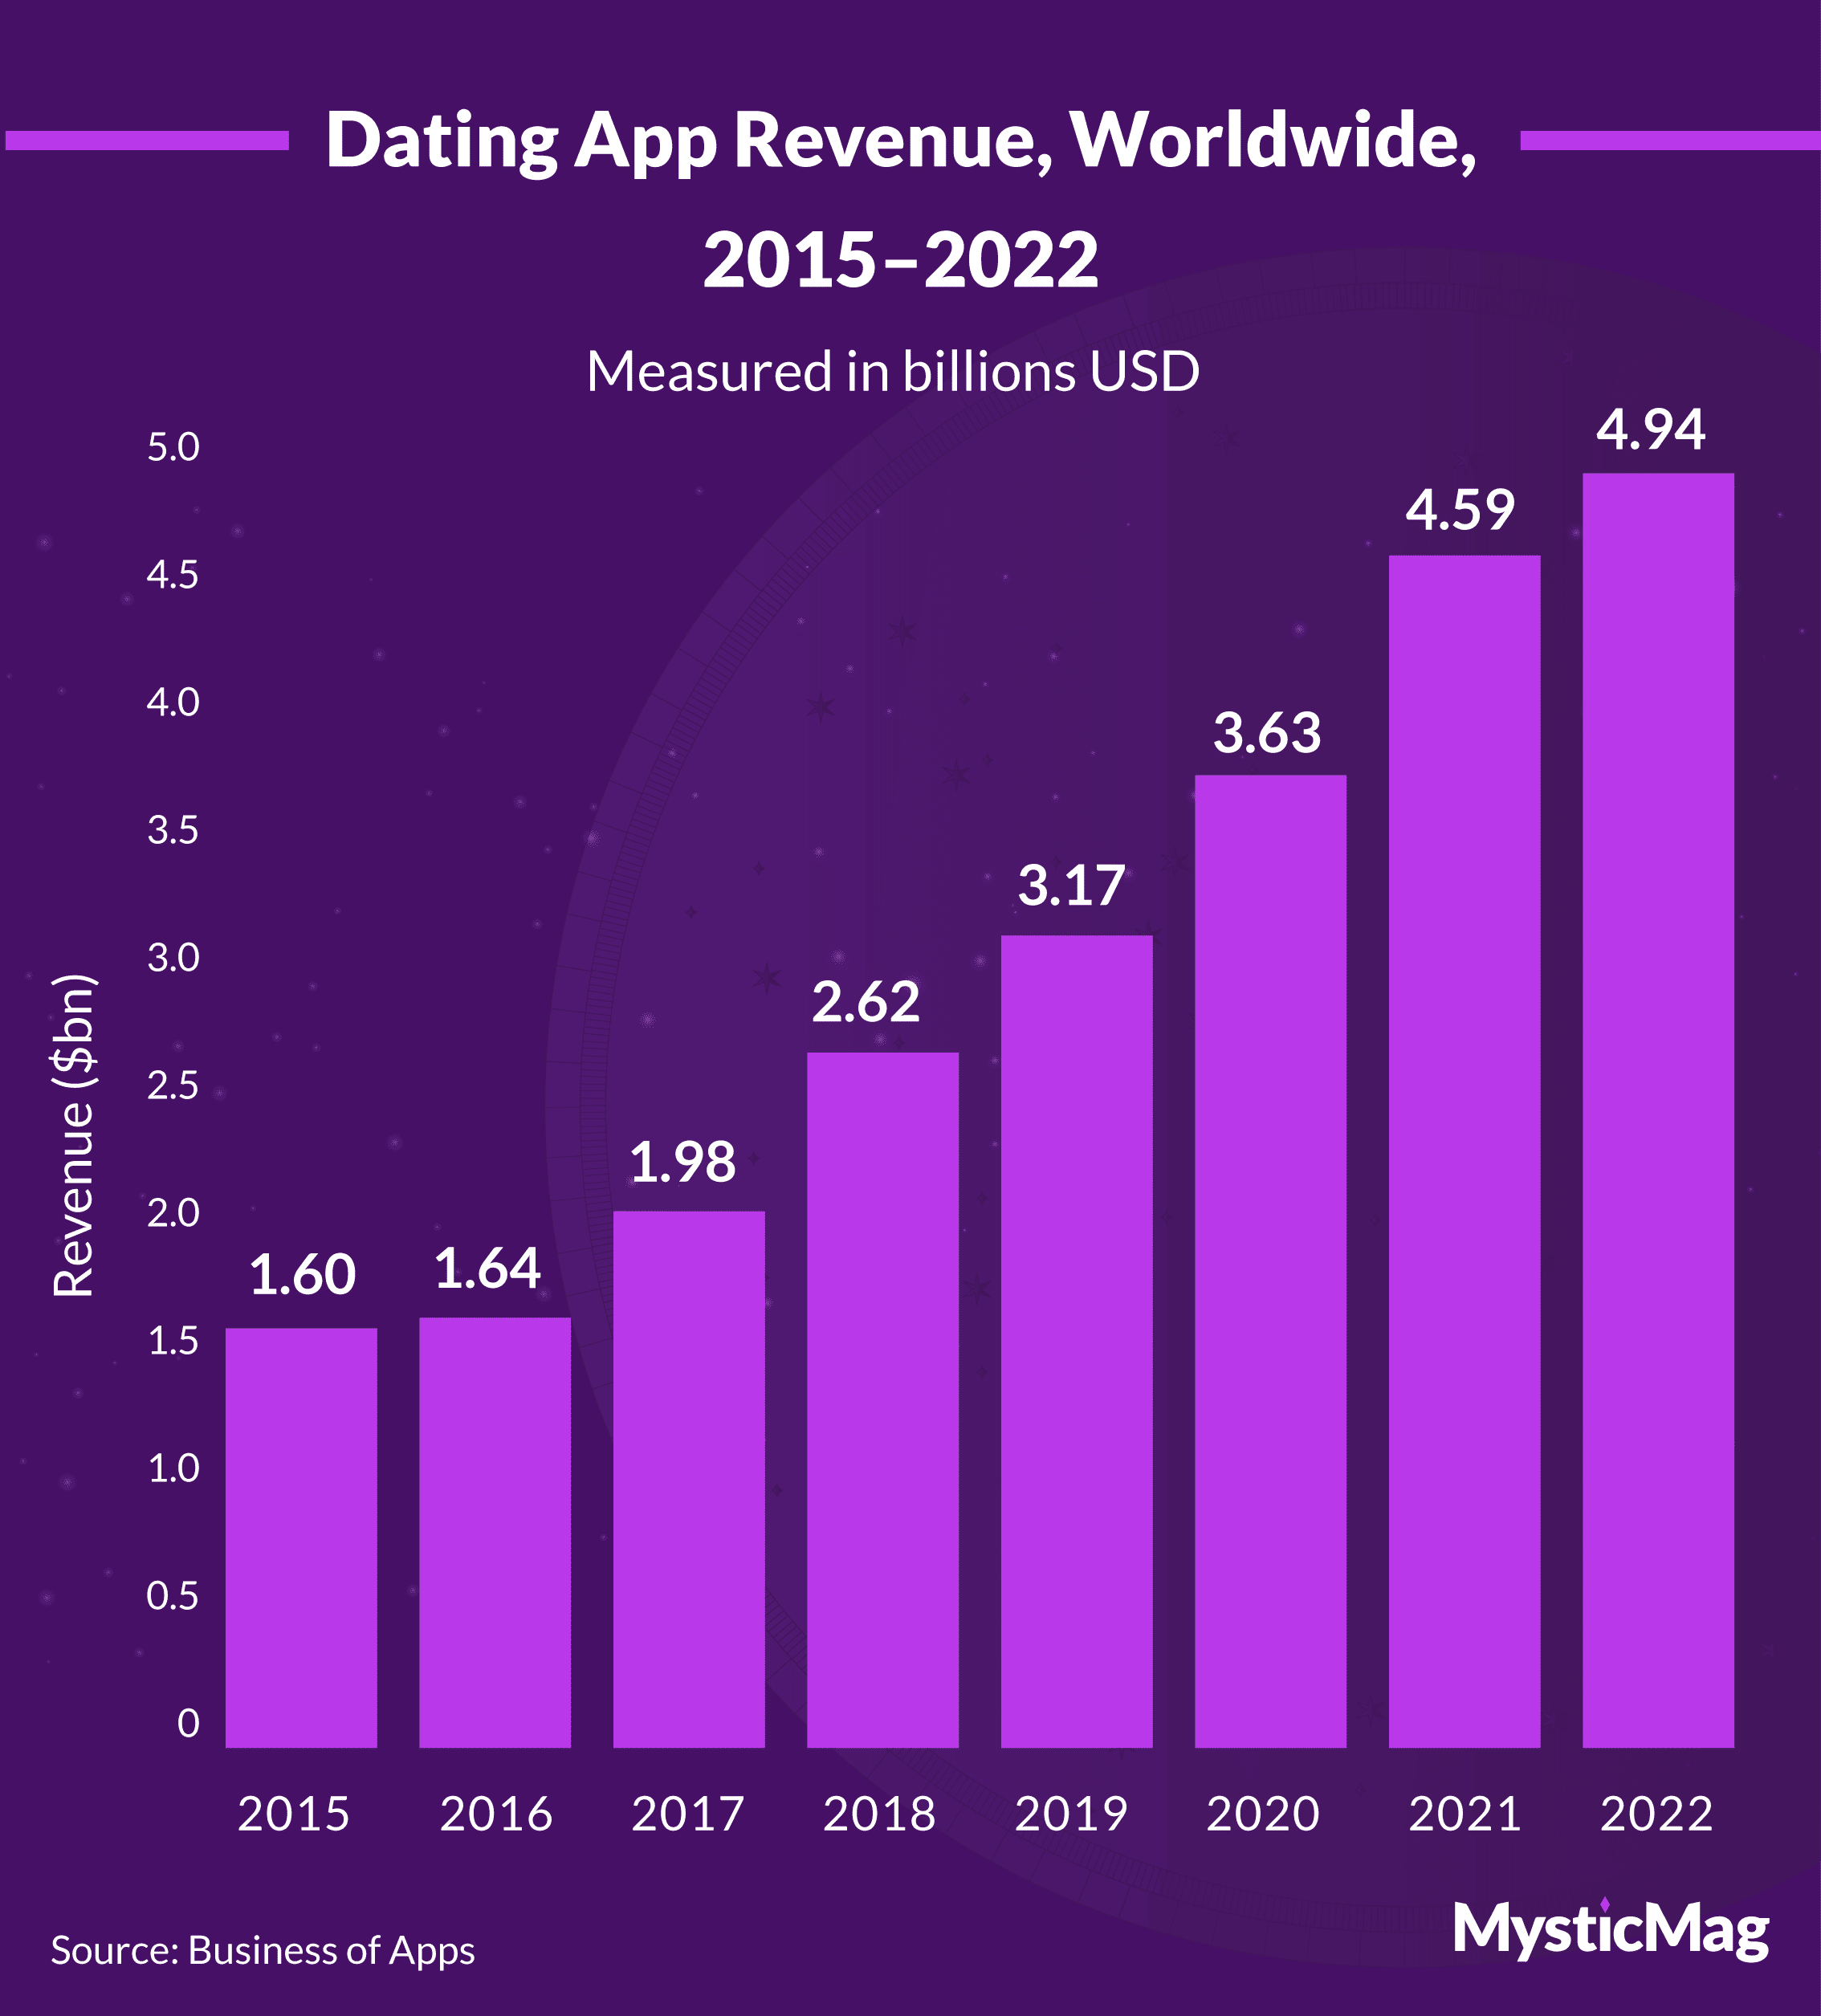 Global dating app revenue, 2015-2022